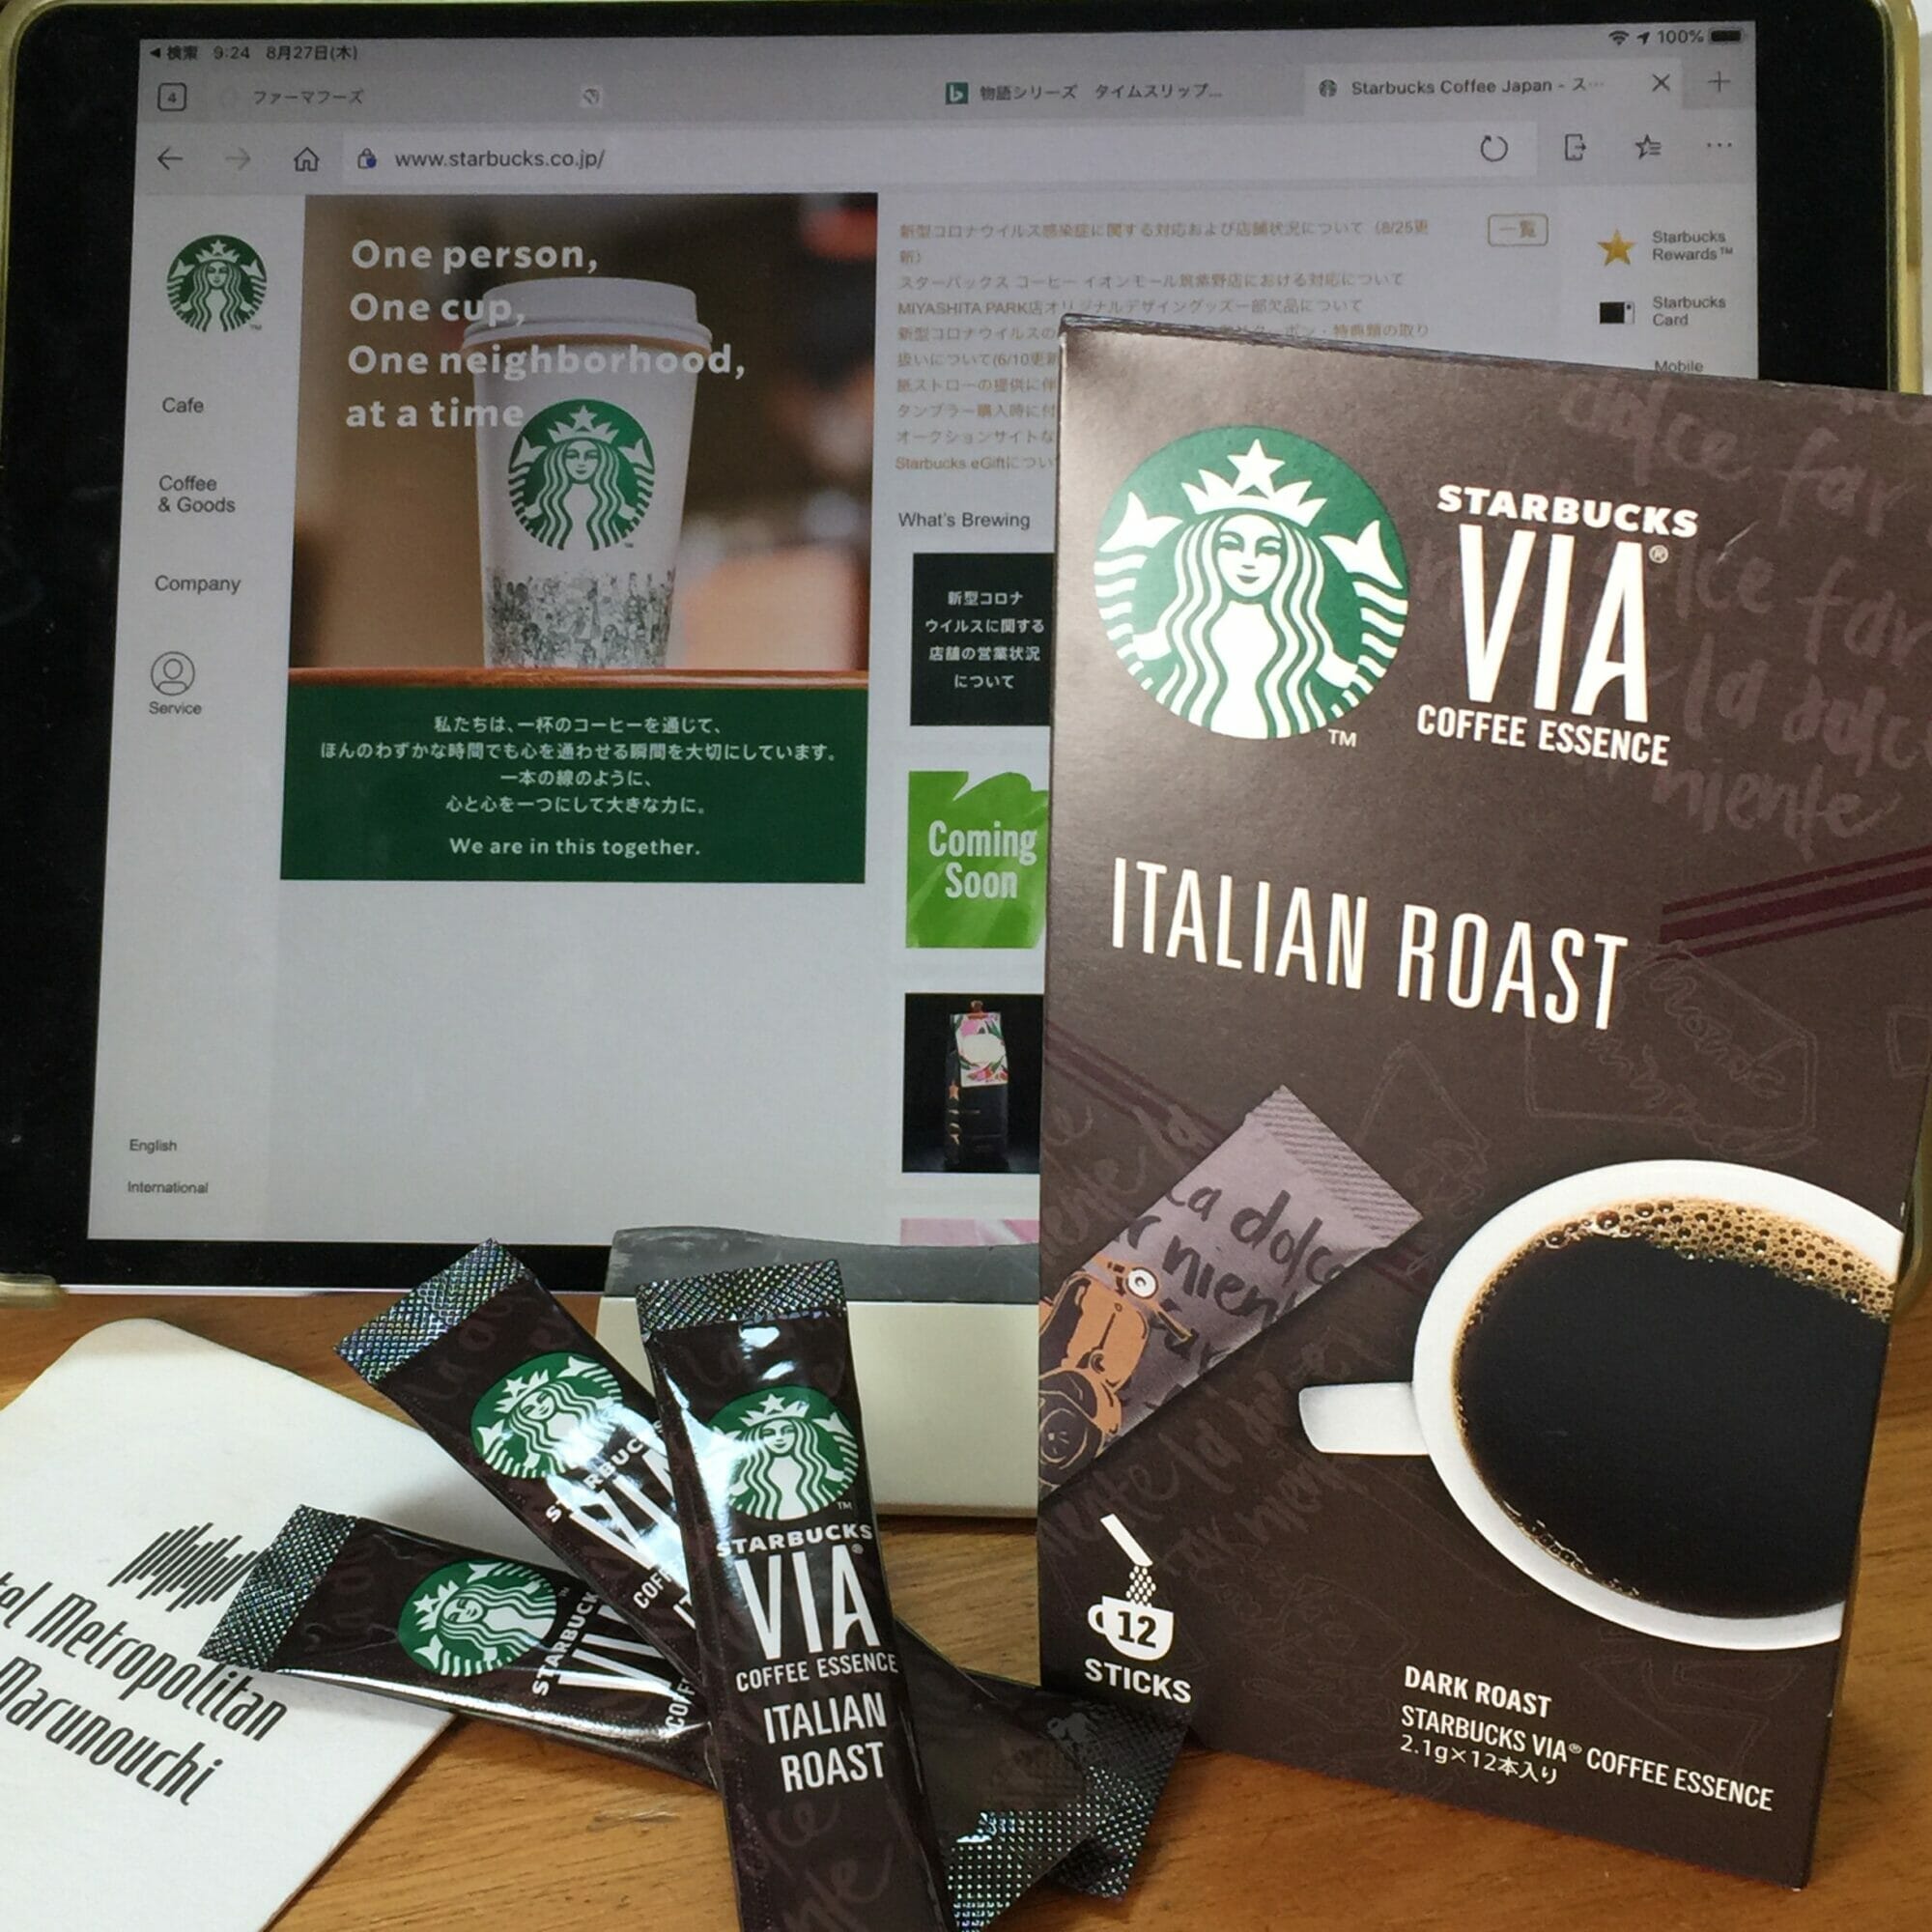 [Cafe] STARBUCKS – VIA COFFEE ESSENCE ITALIAN ROAST (DARK ROAST) をRewardも使って購入 [2020/08/27] ID21795